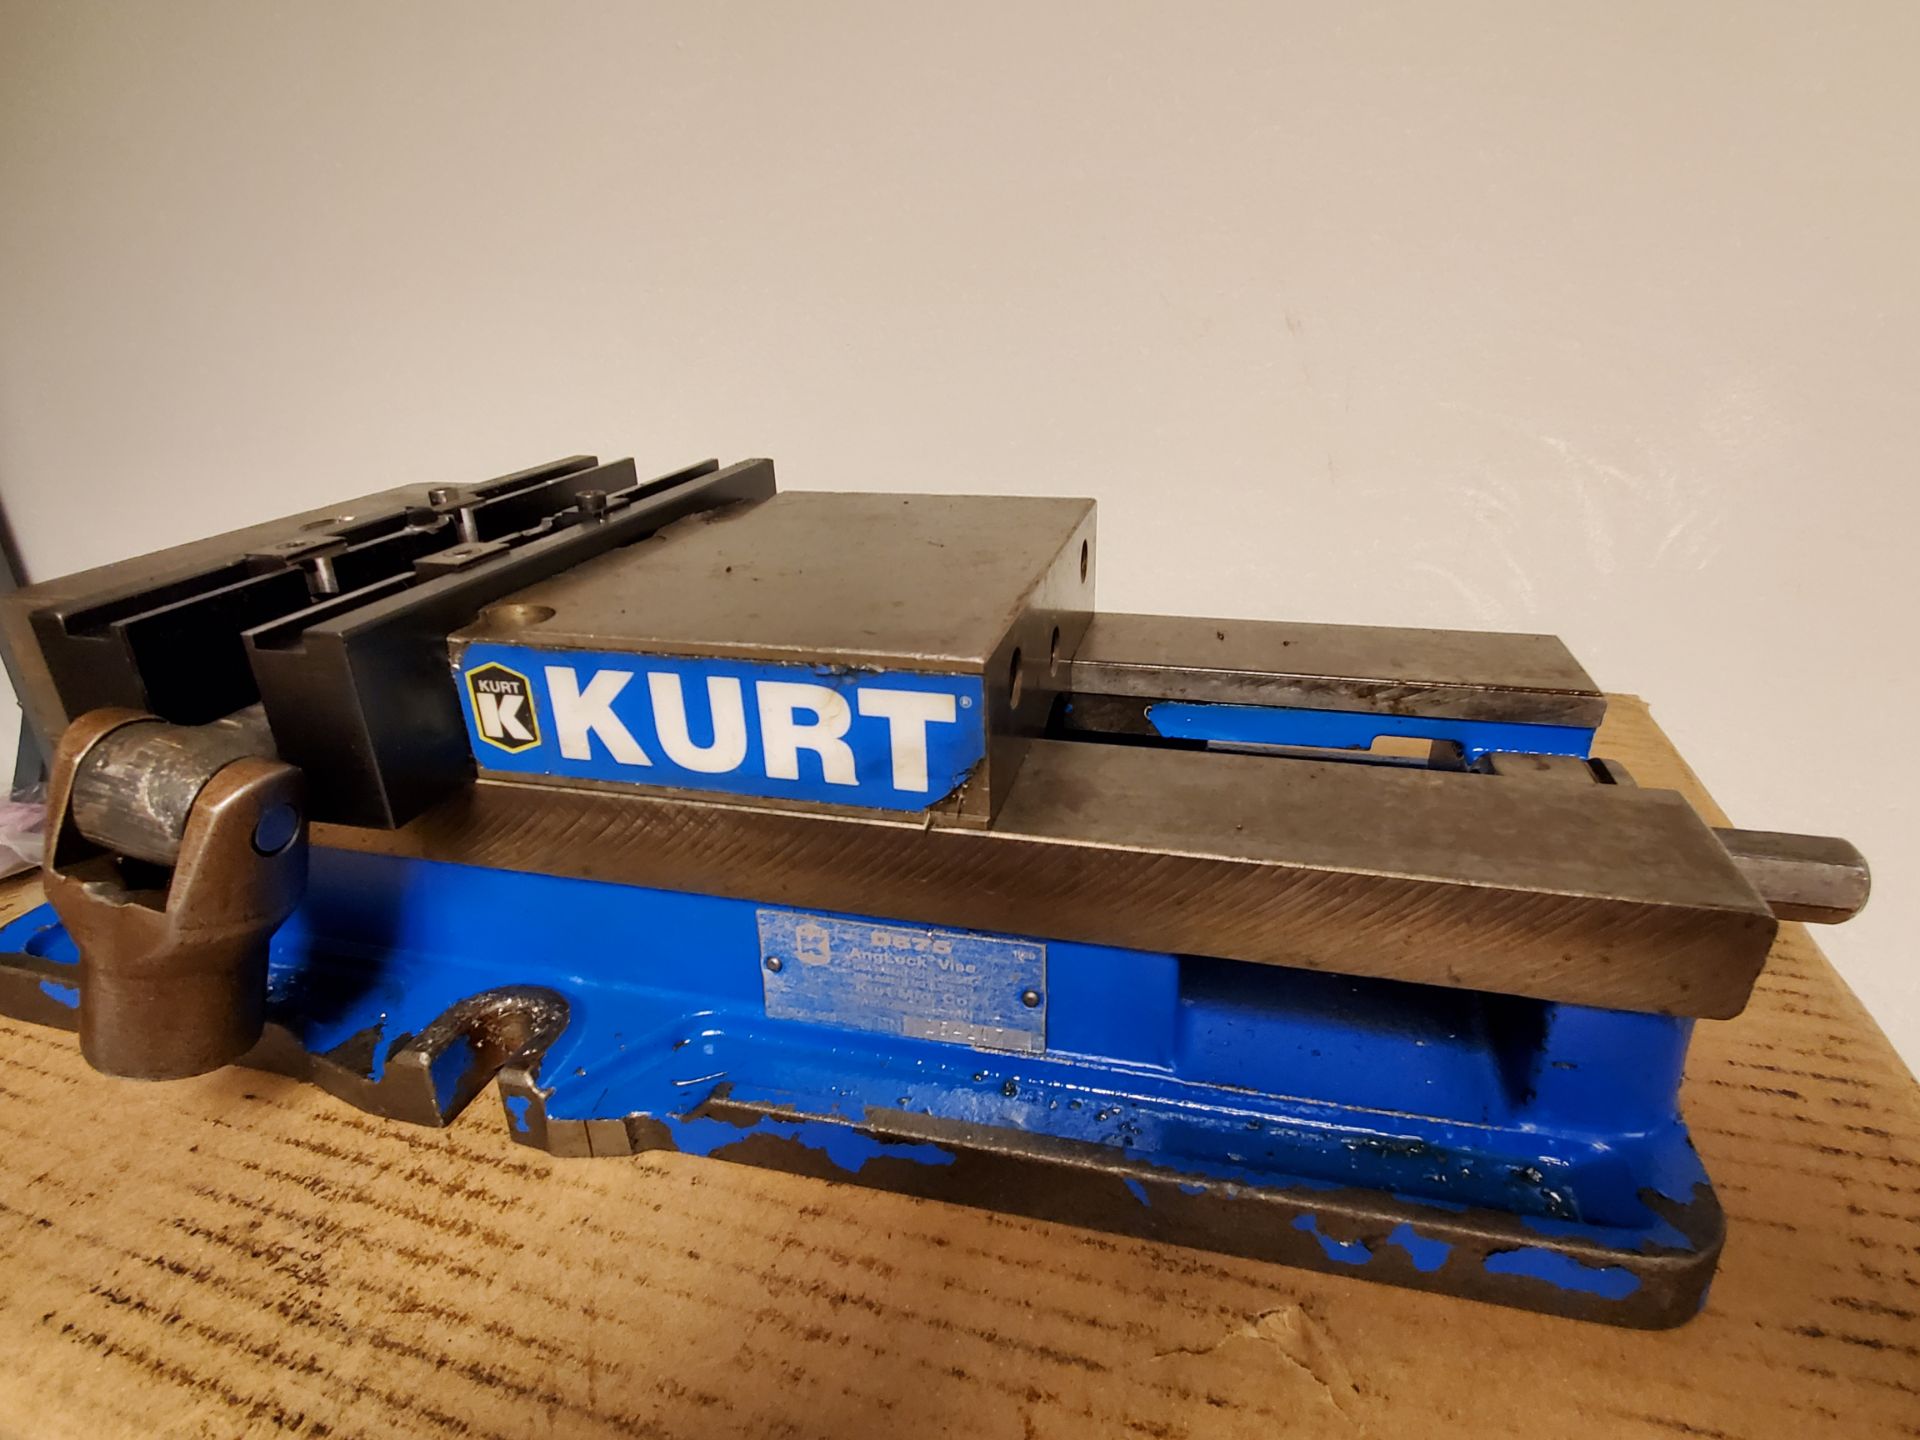 Kurt Model D675 8" Machine Vise - Image 2 of 4